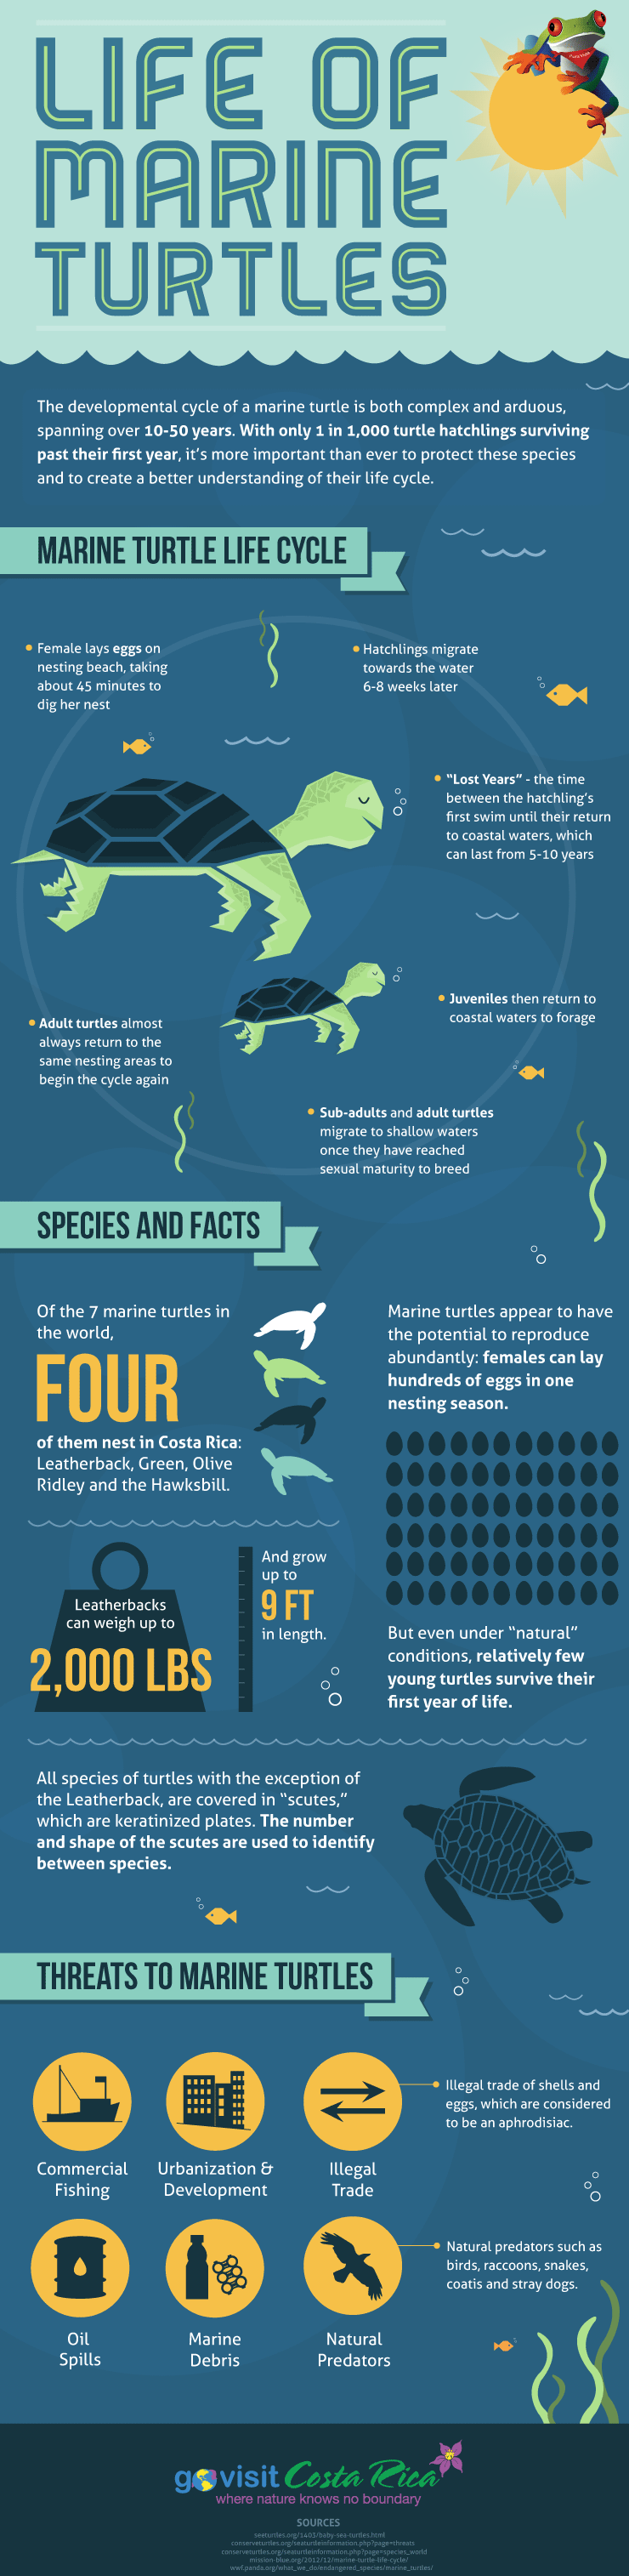 Infographic Life of marine turtles 